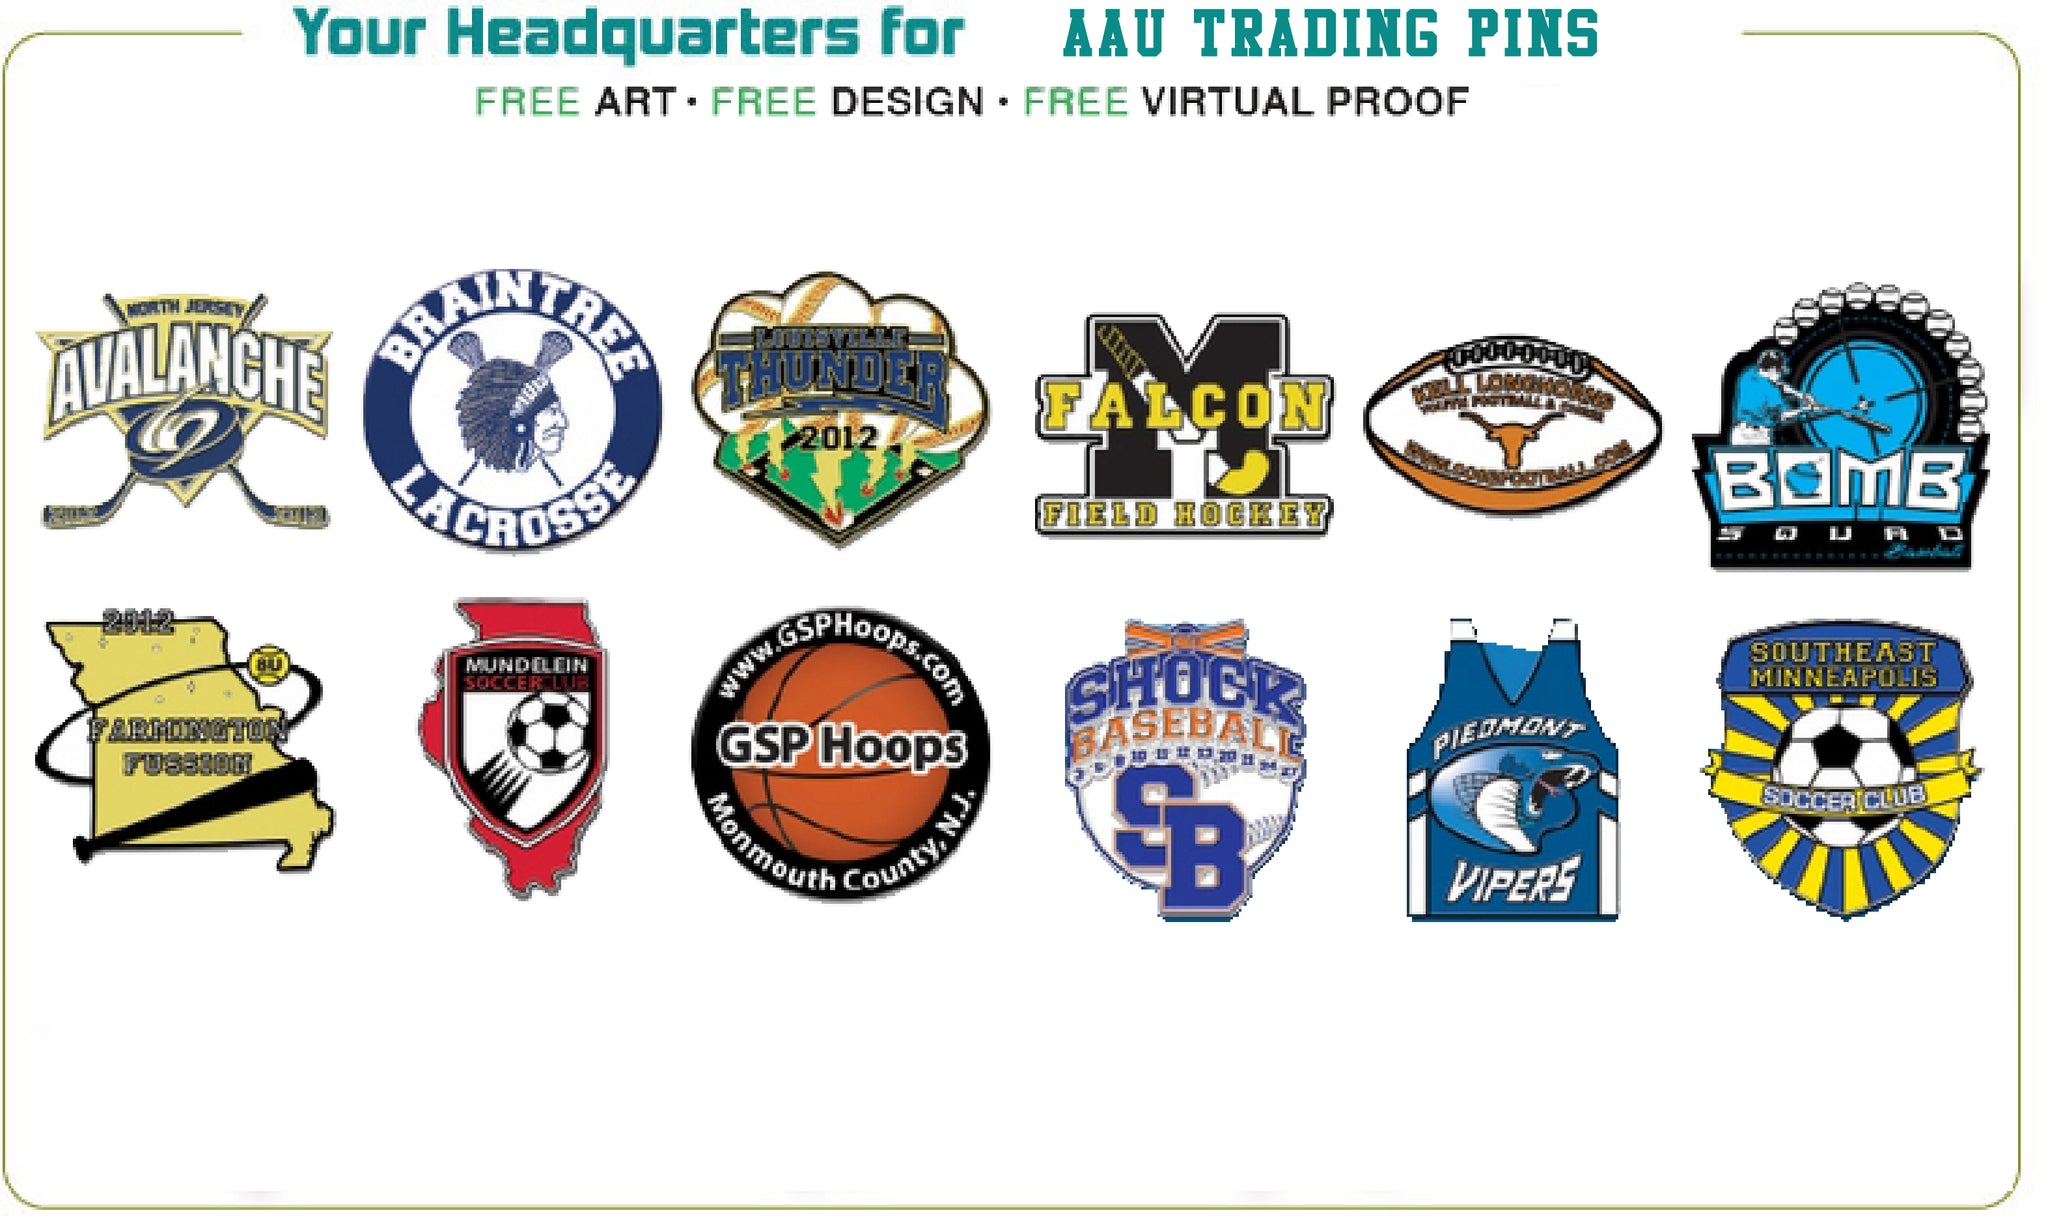 AAU Custom Trading Pins - SteelBerry Pins